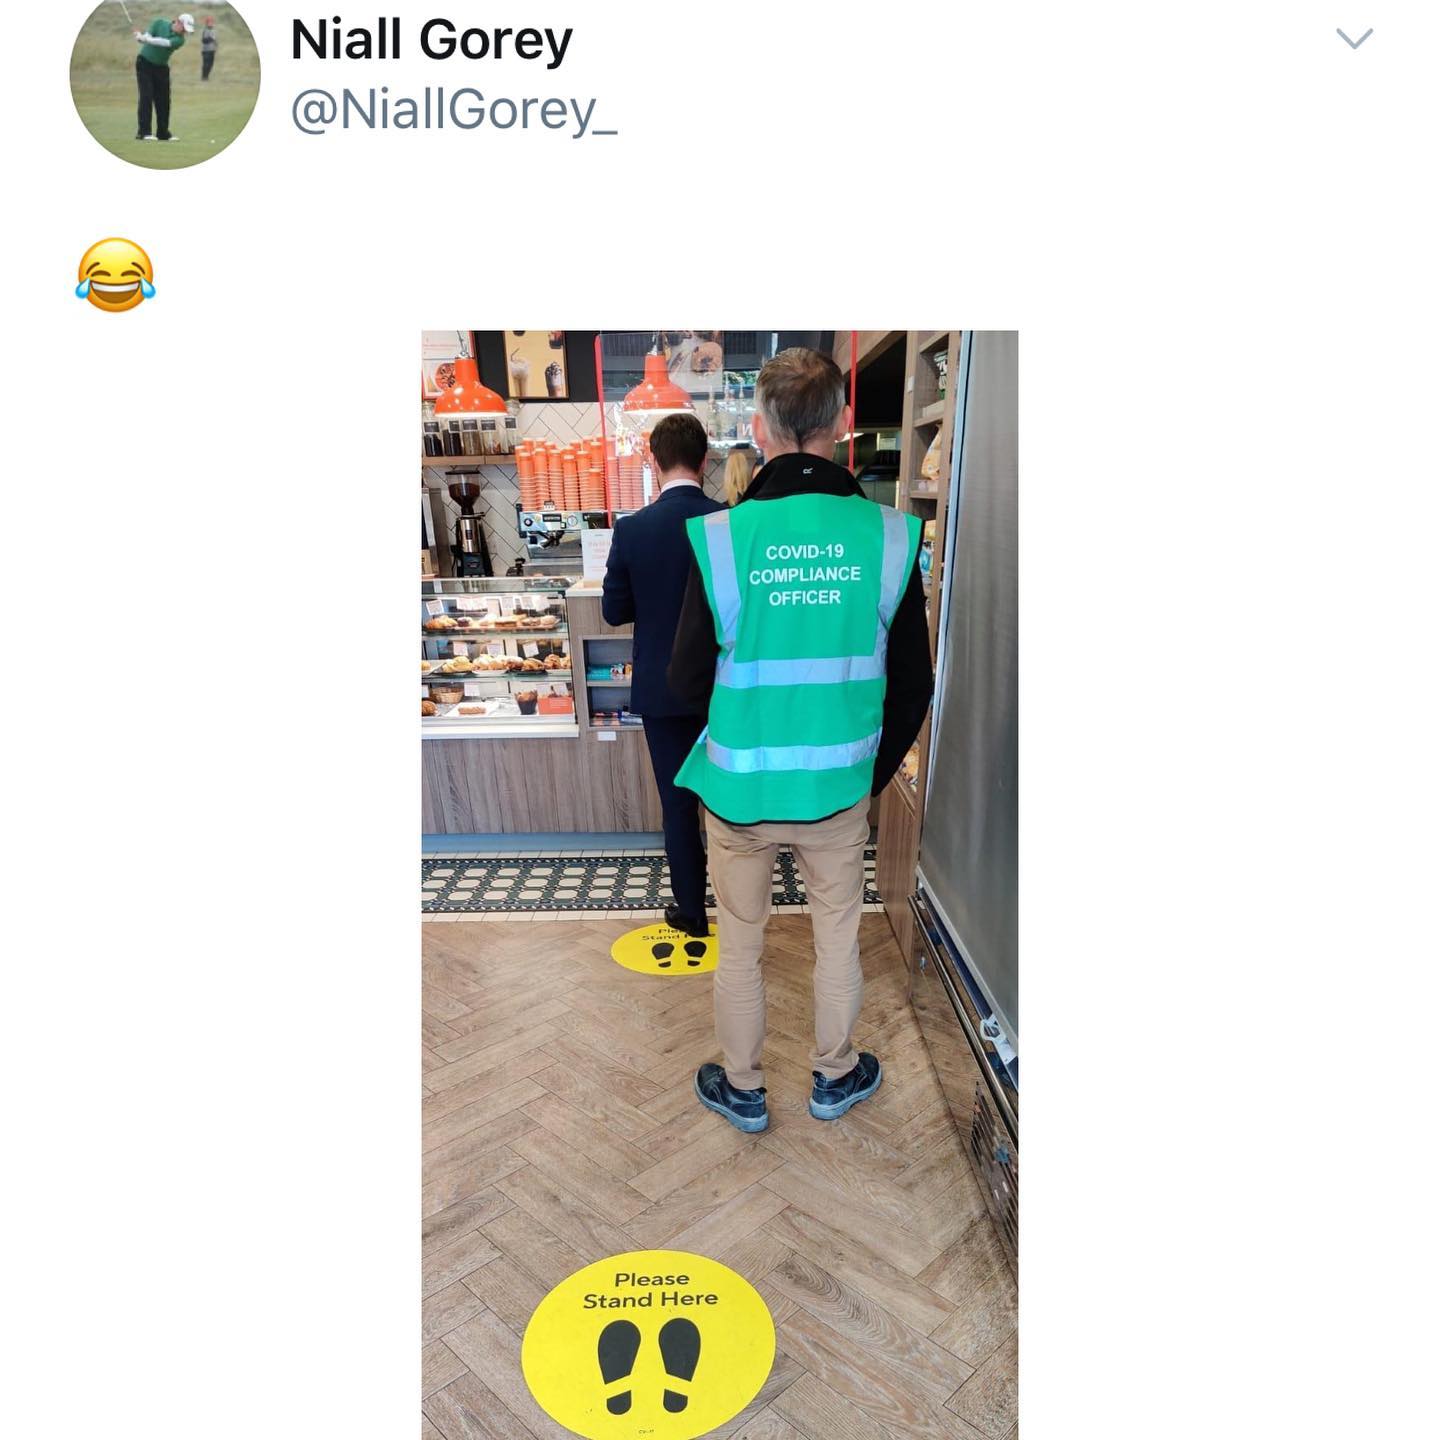 dank memes - twitter - compliance officer jokes - Niall Gorey Covid19 Compliance Officer 3339 1 S Please Stand Here 00